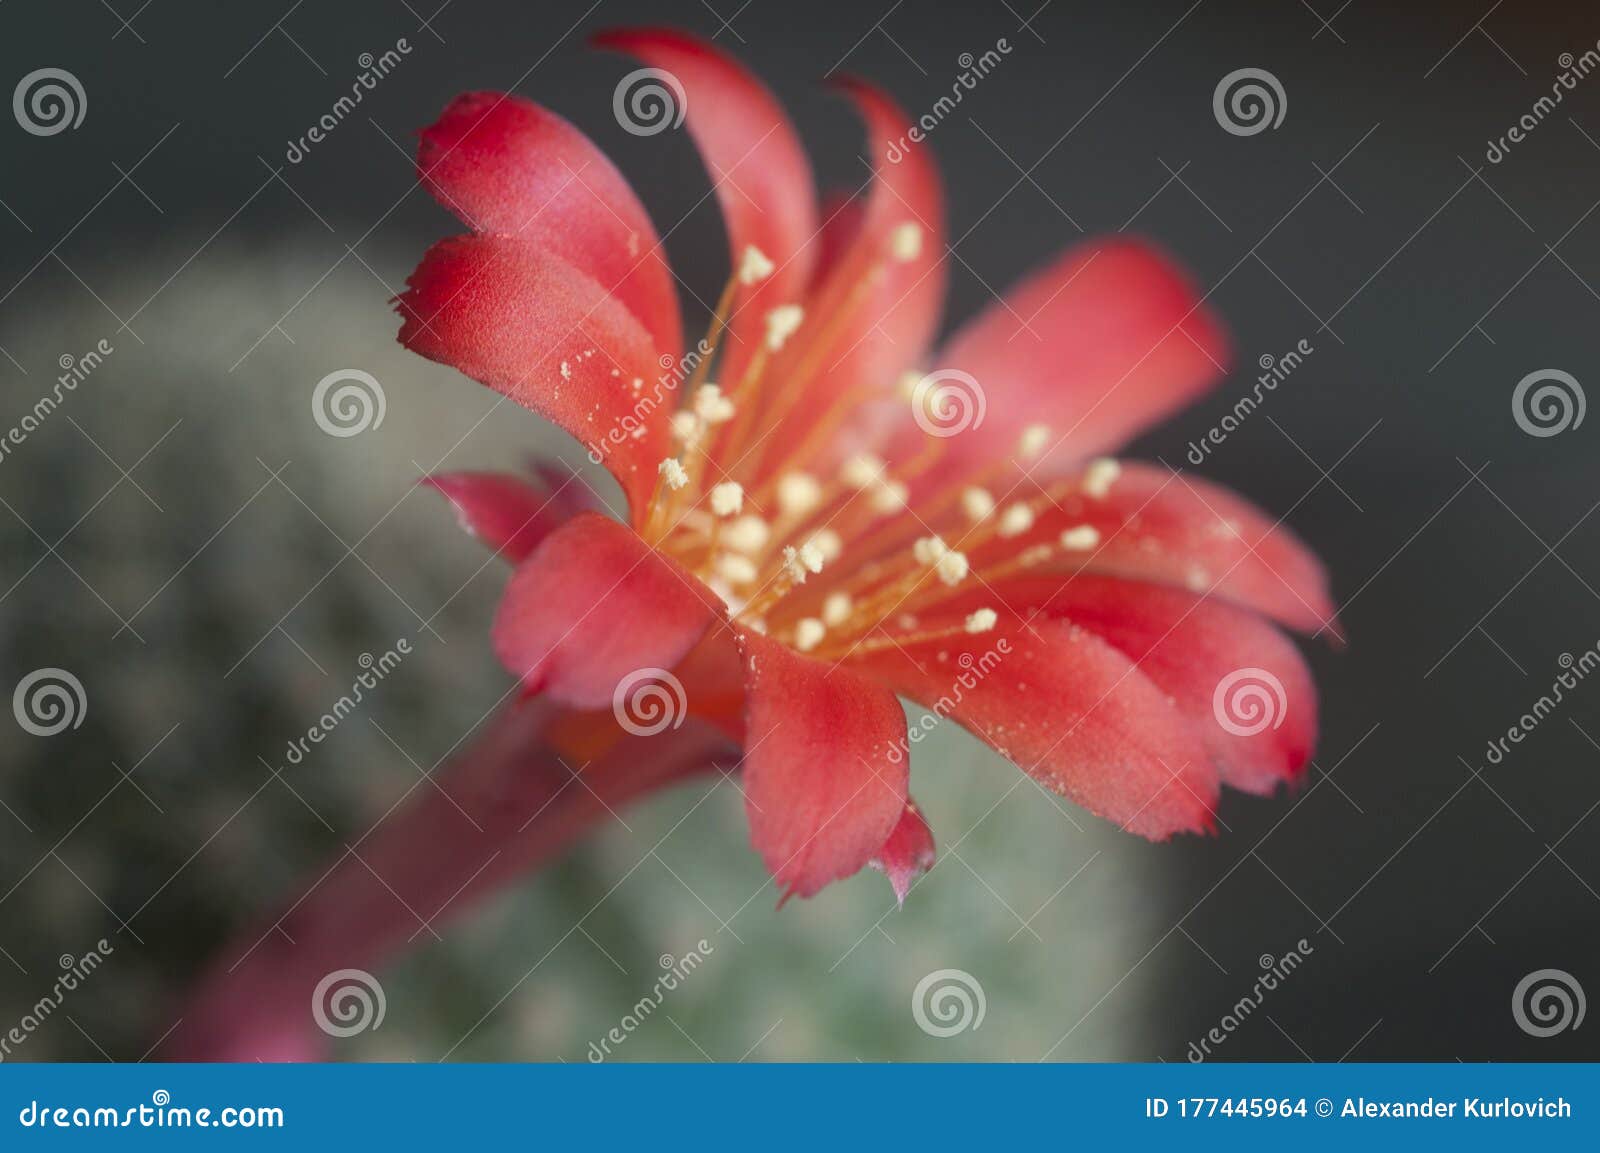 rebutia minuscula cactus flower